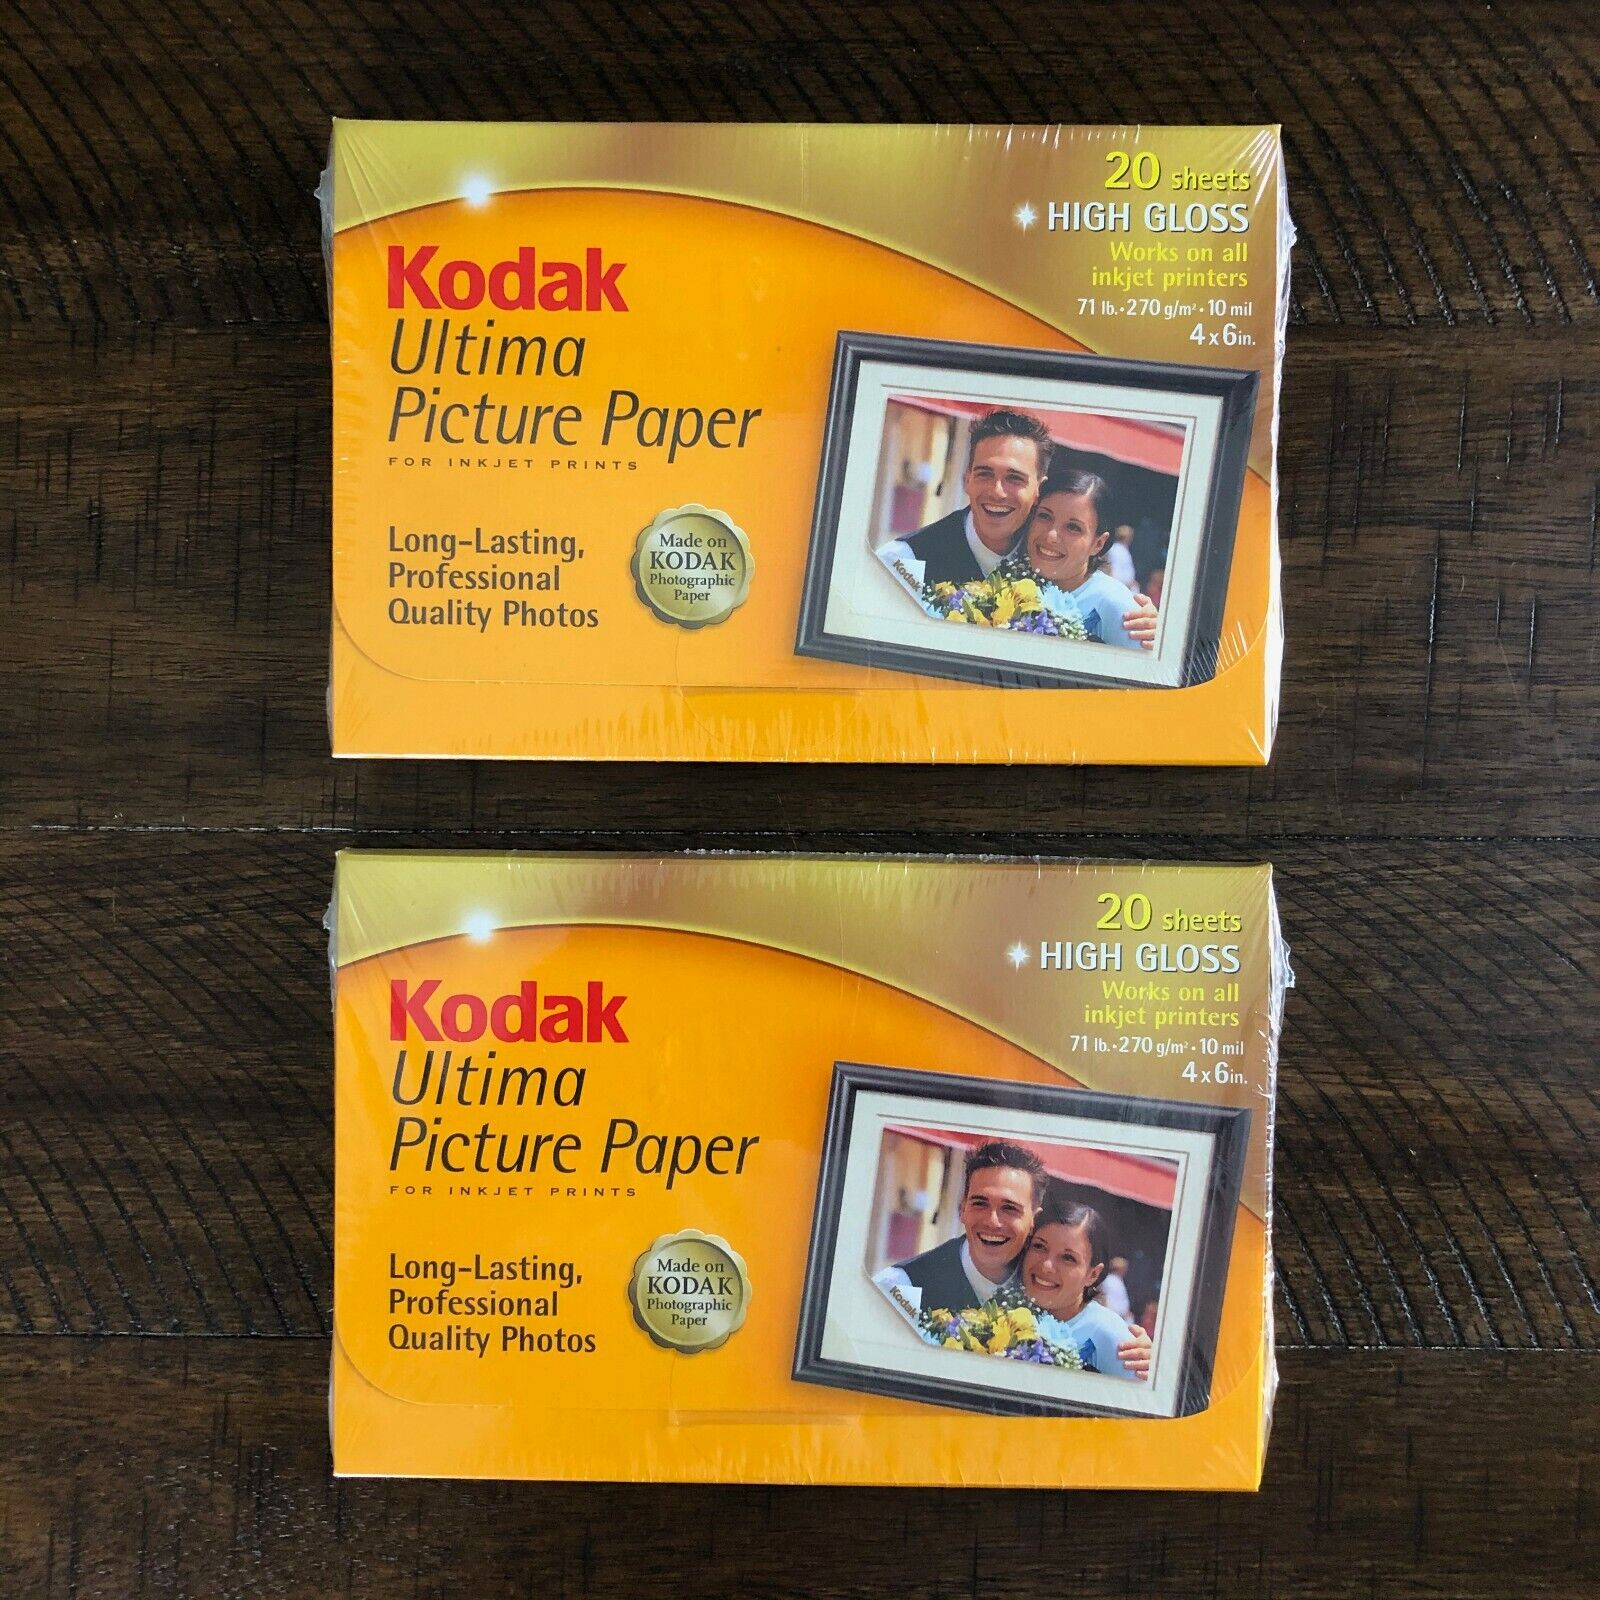 Lot of 2 Kodak Ultima Picture Paper for Inkjet Prints 4x6, 20 Sheets (40 Total)